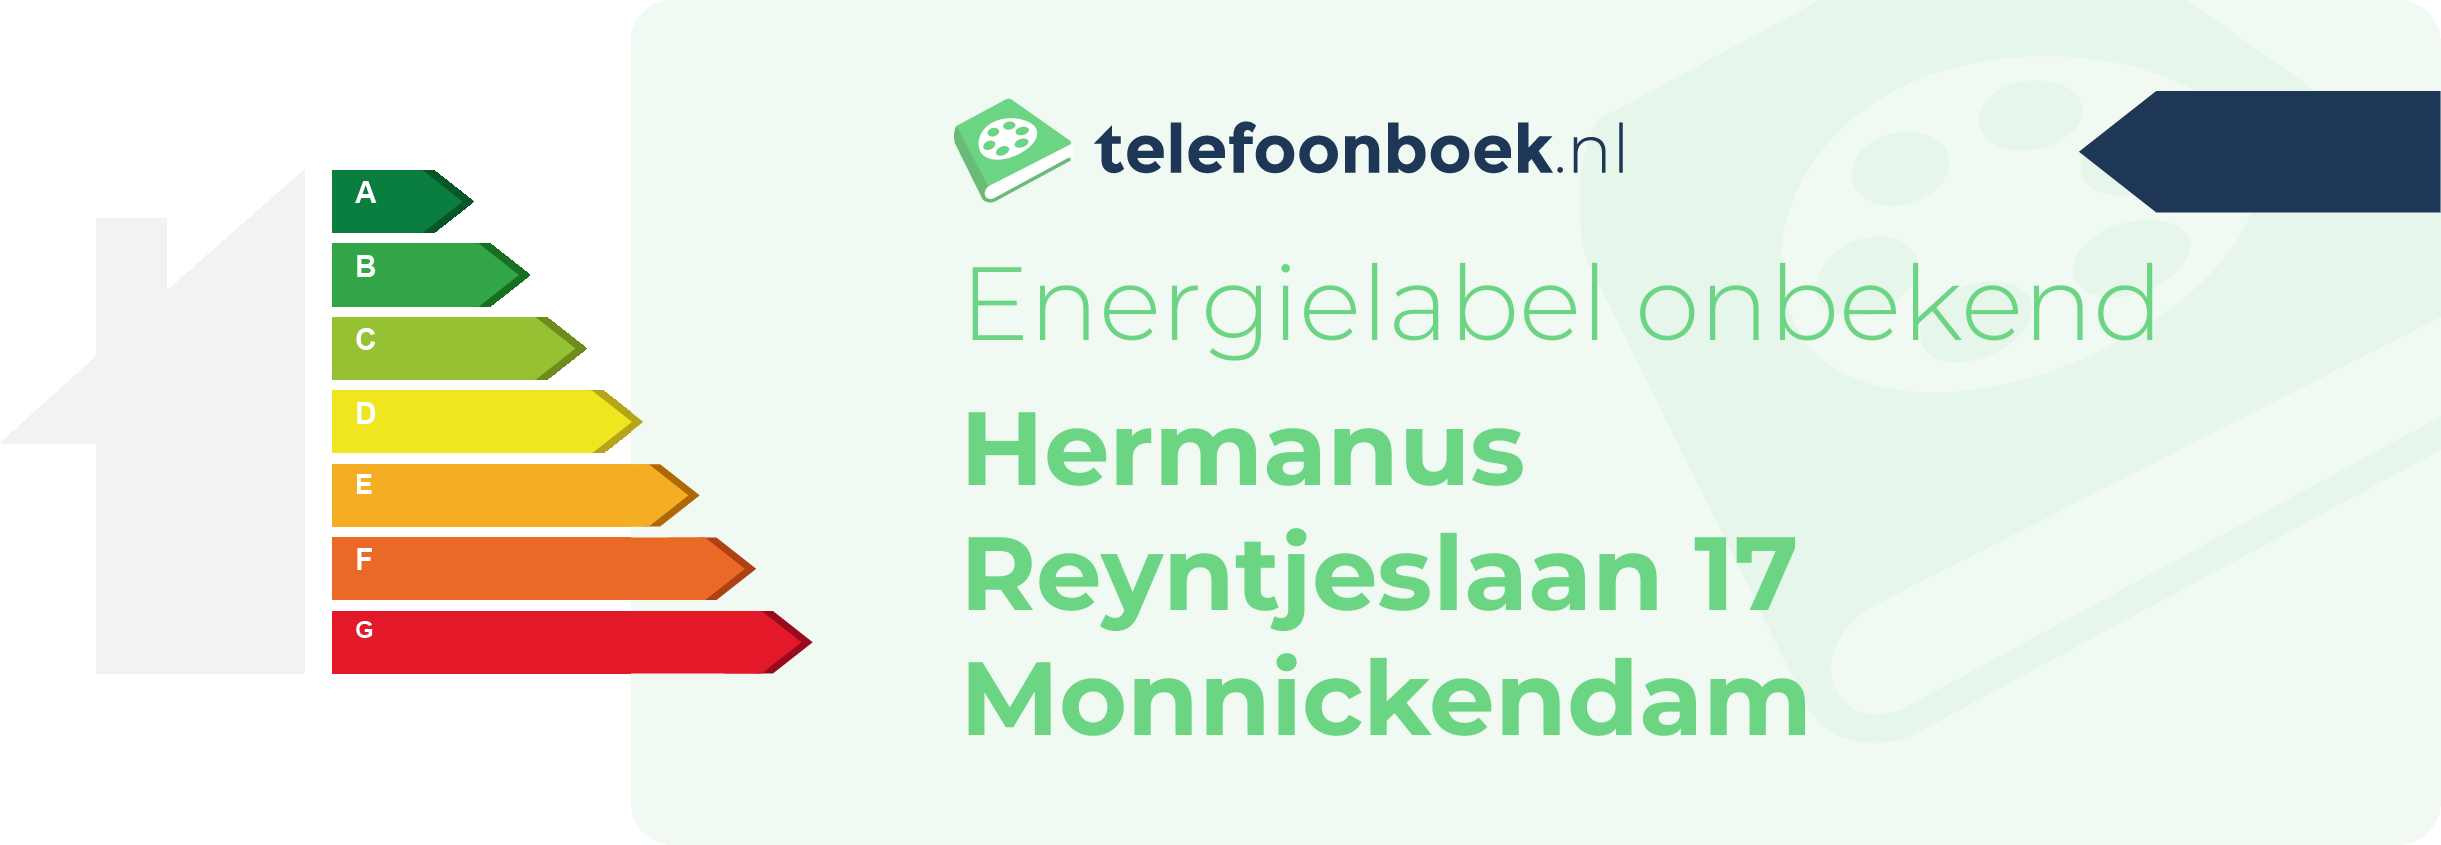 Energielabel Hermanus Reyntjeslaan 17 Monnickendam